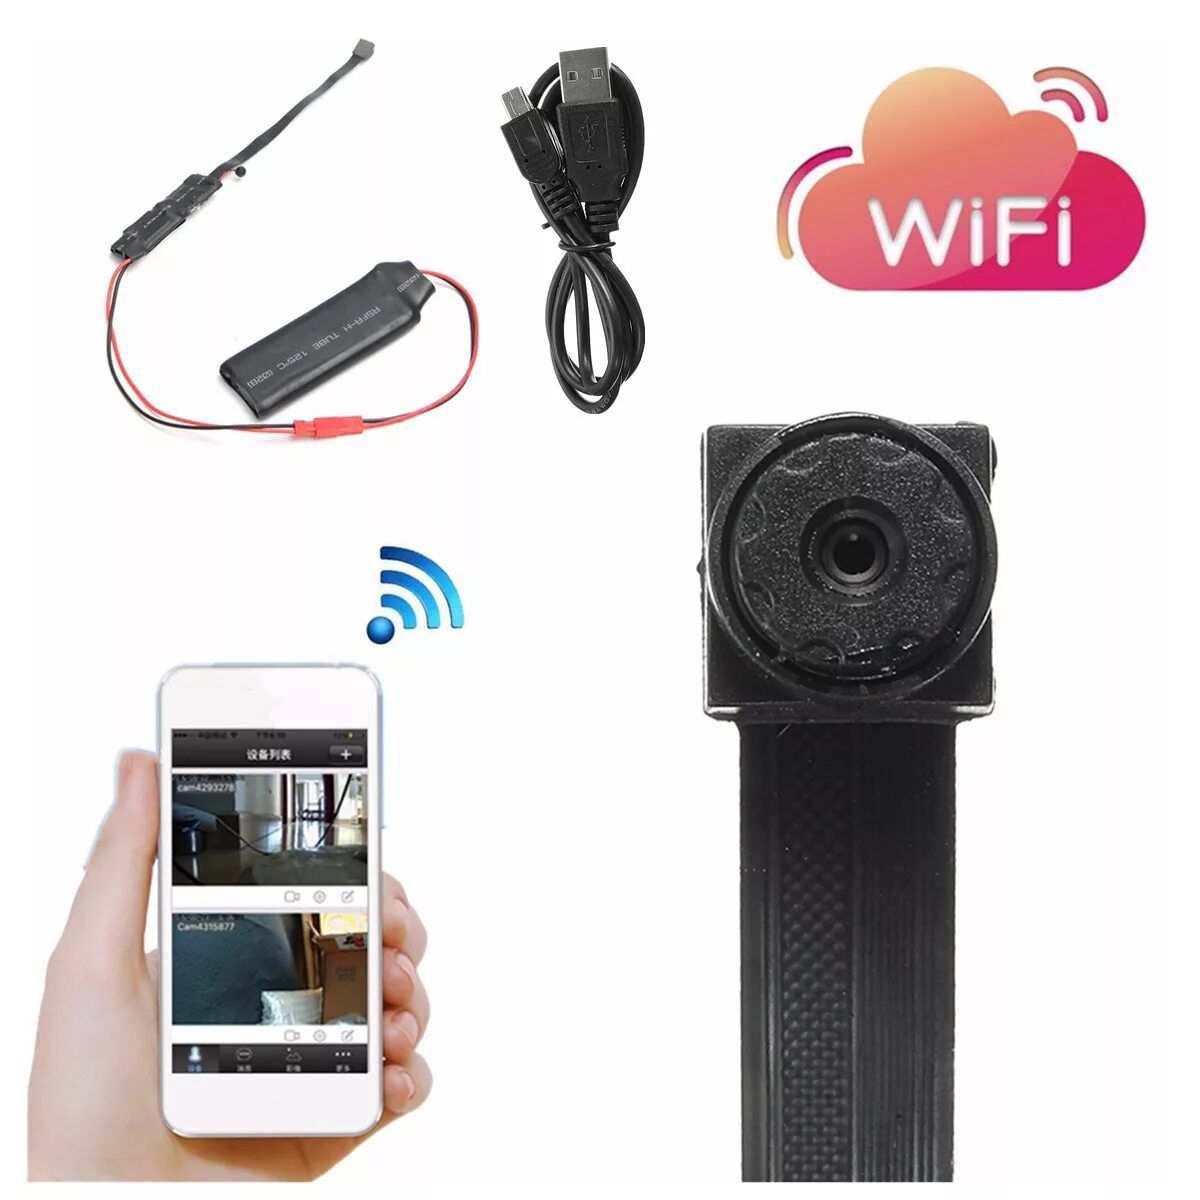 Мини камера m1 (Wi-Fi. Мини-камера зарядник видеонаблюдения с USB, 1080p, Wi-Fi. Купить камеру для андроид телефона